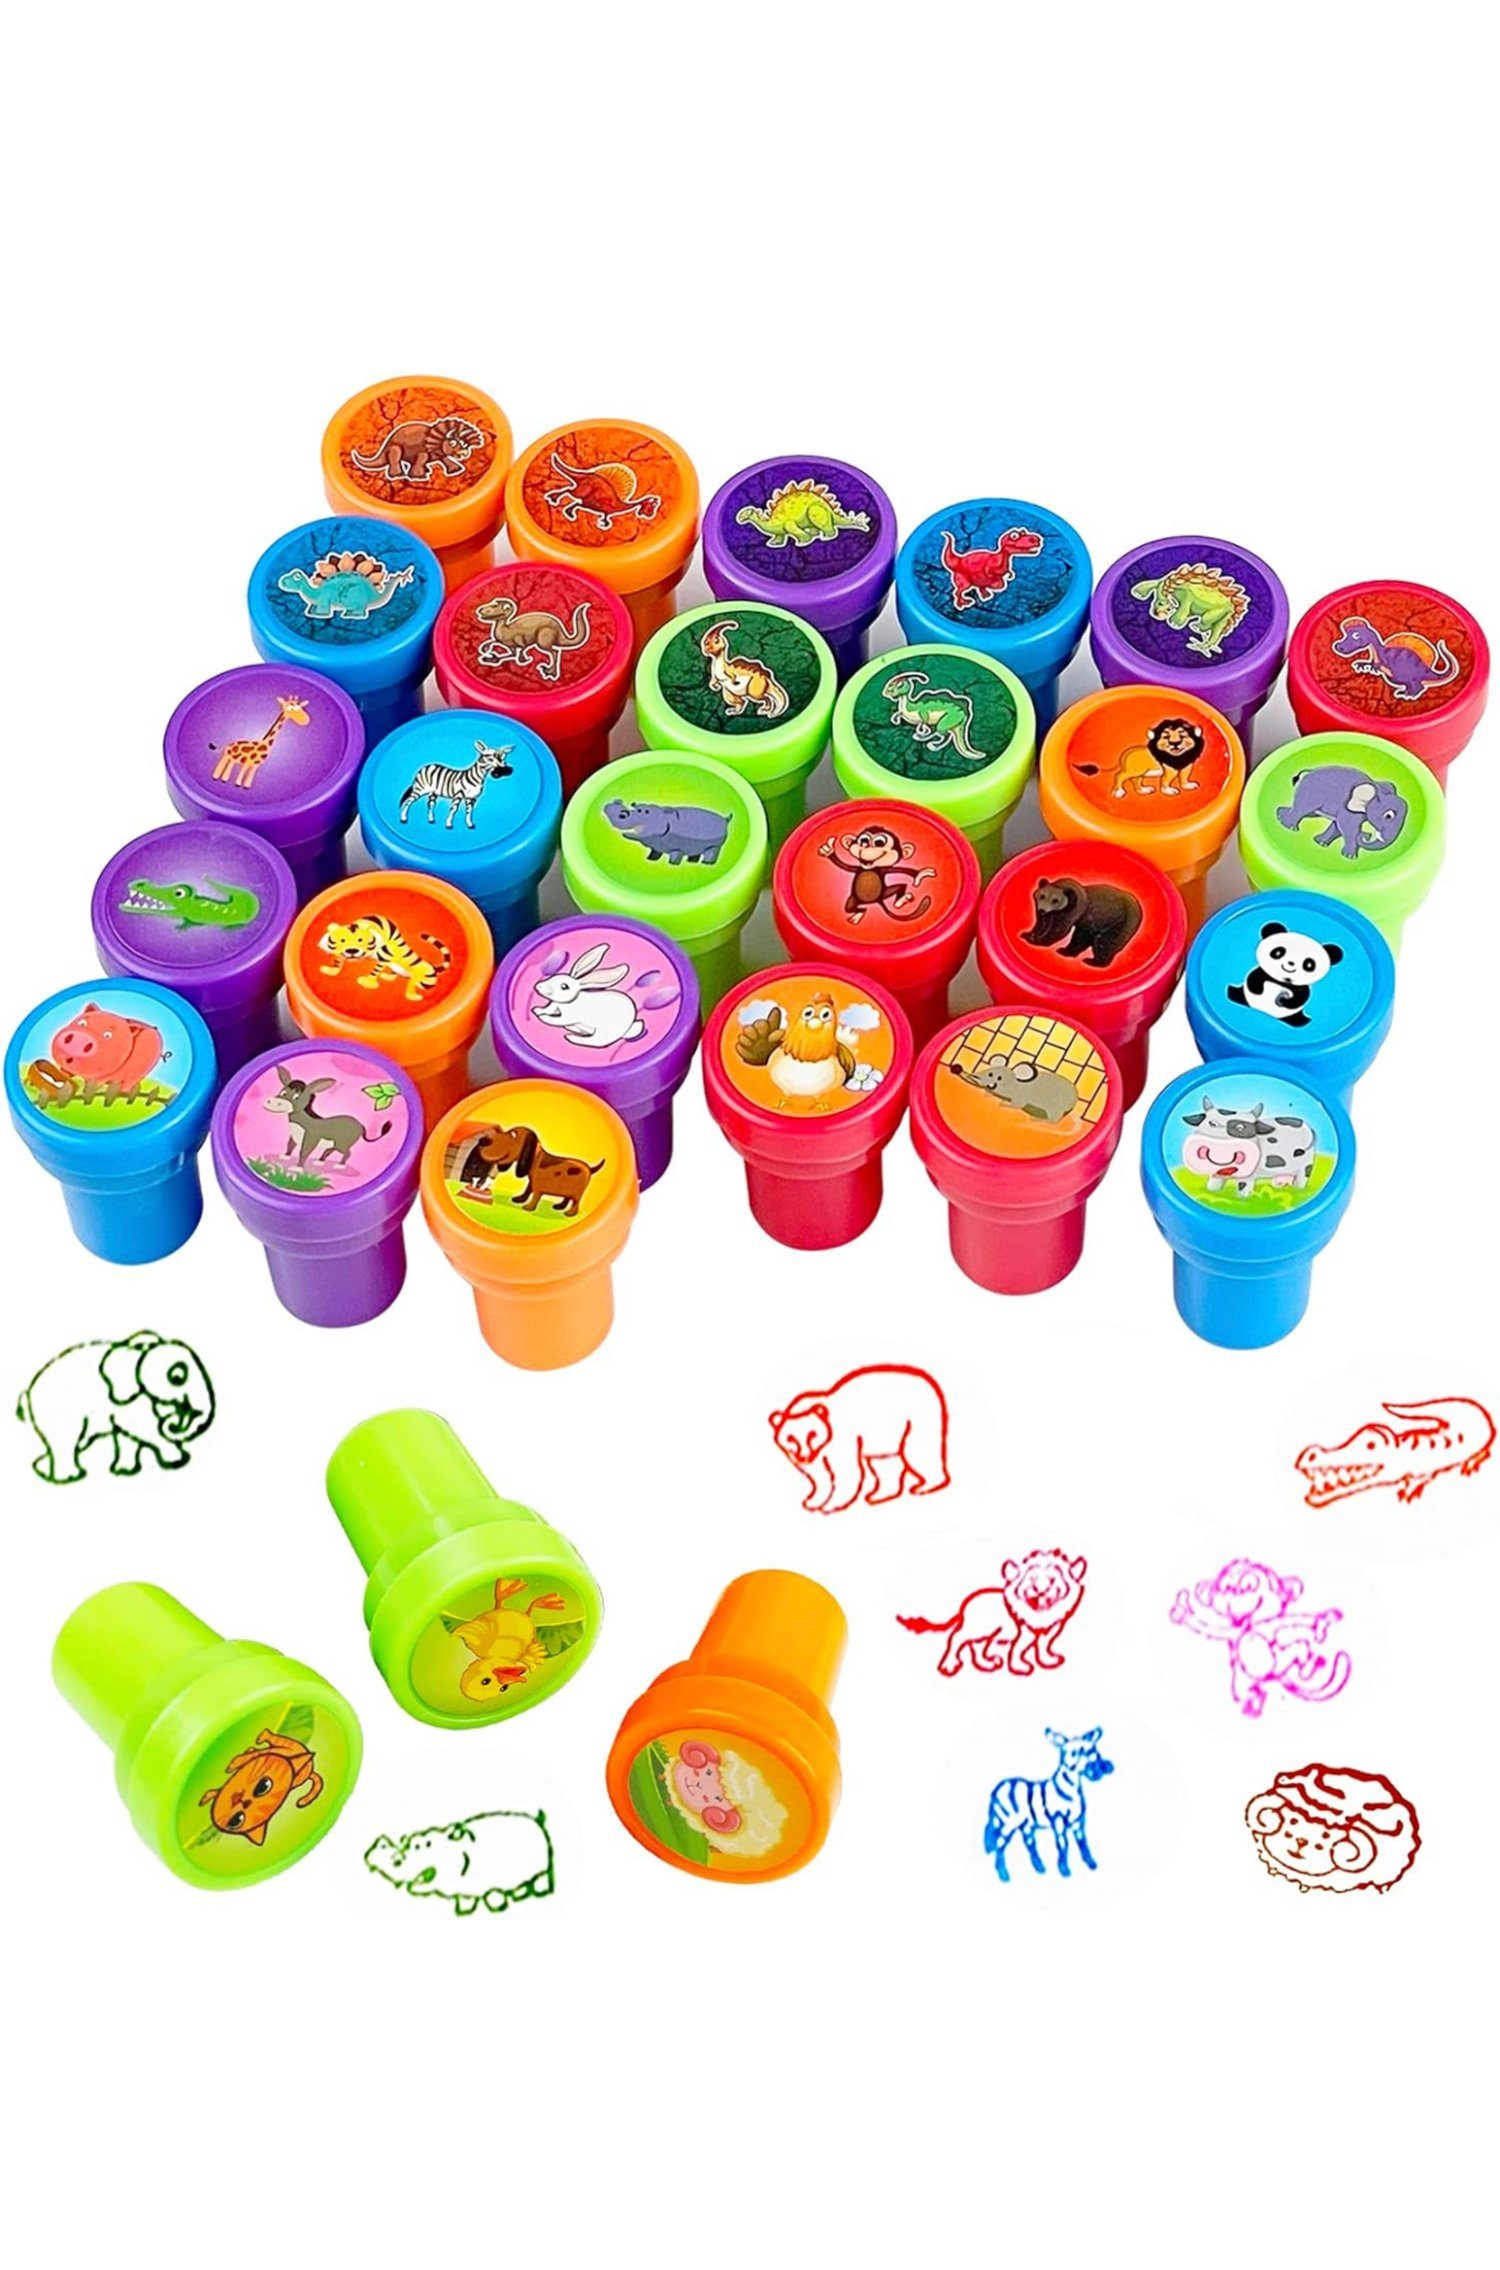 Ailiebe Design Stempel 30 Stück Kinderstempelset Tierstempelset mehrfarbige selbstfärbende, Dinostempel Spielzeugstempel Geschenkeidee Kinderparty Geburtstag